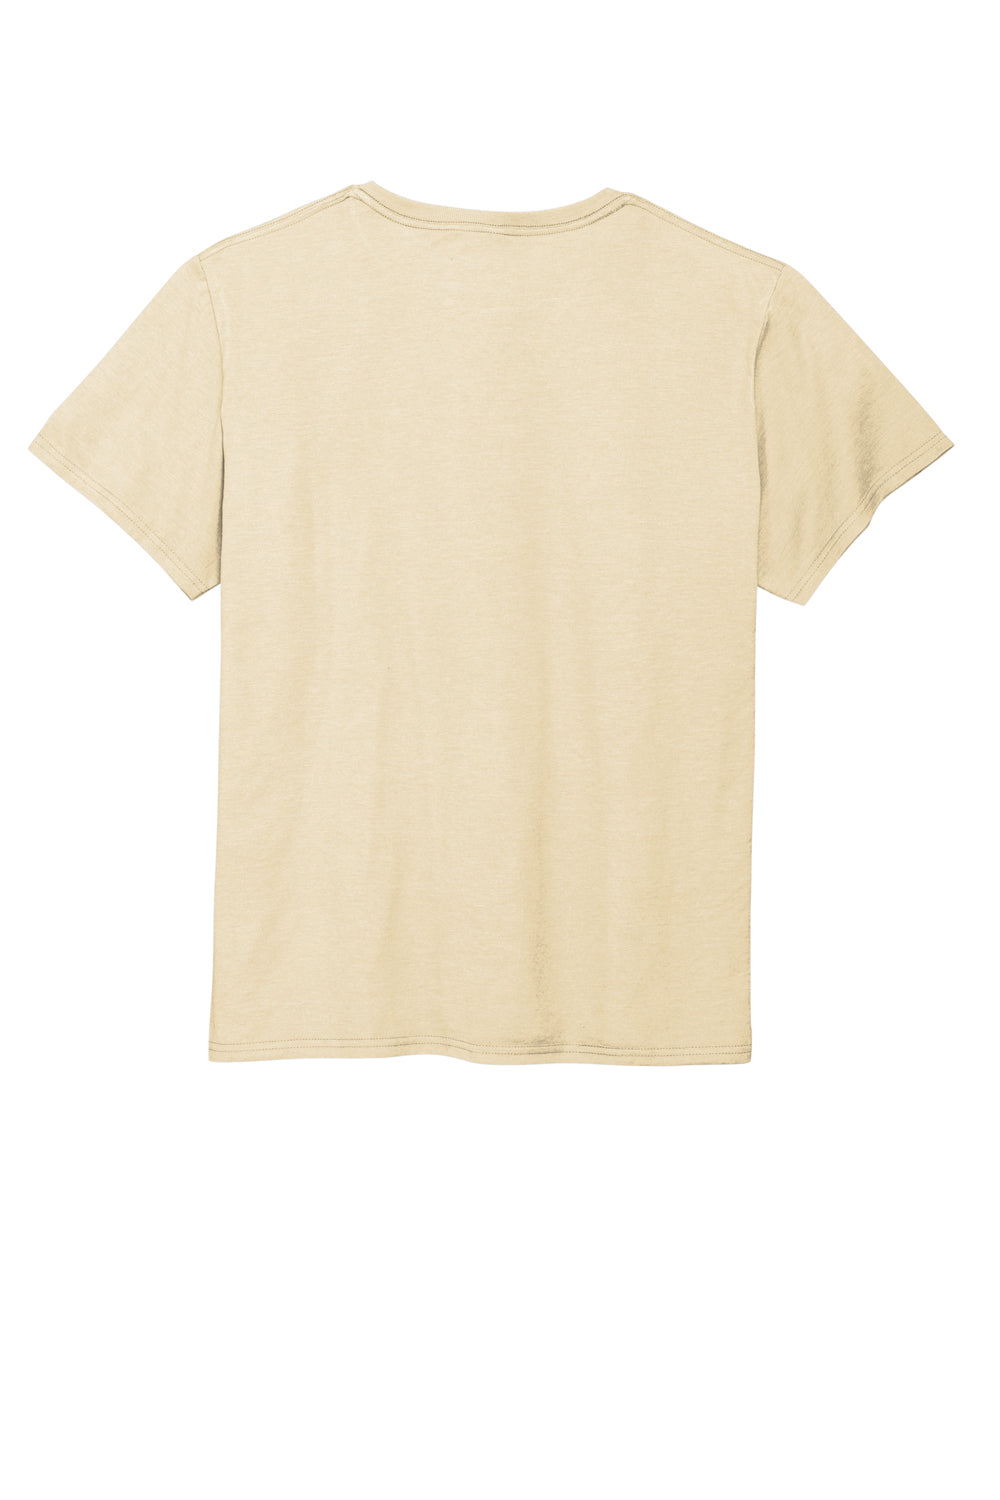 Jerzees 560M Mens Premium Blend Ring Spun Short Sleeve Crewneck T-Shirt Heather Sweet Cream Flat Back